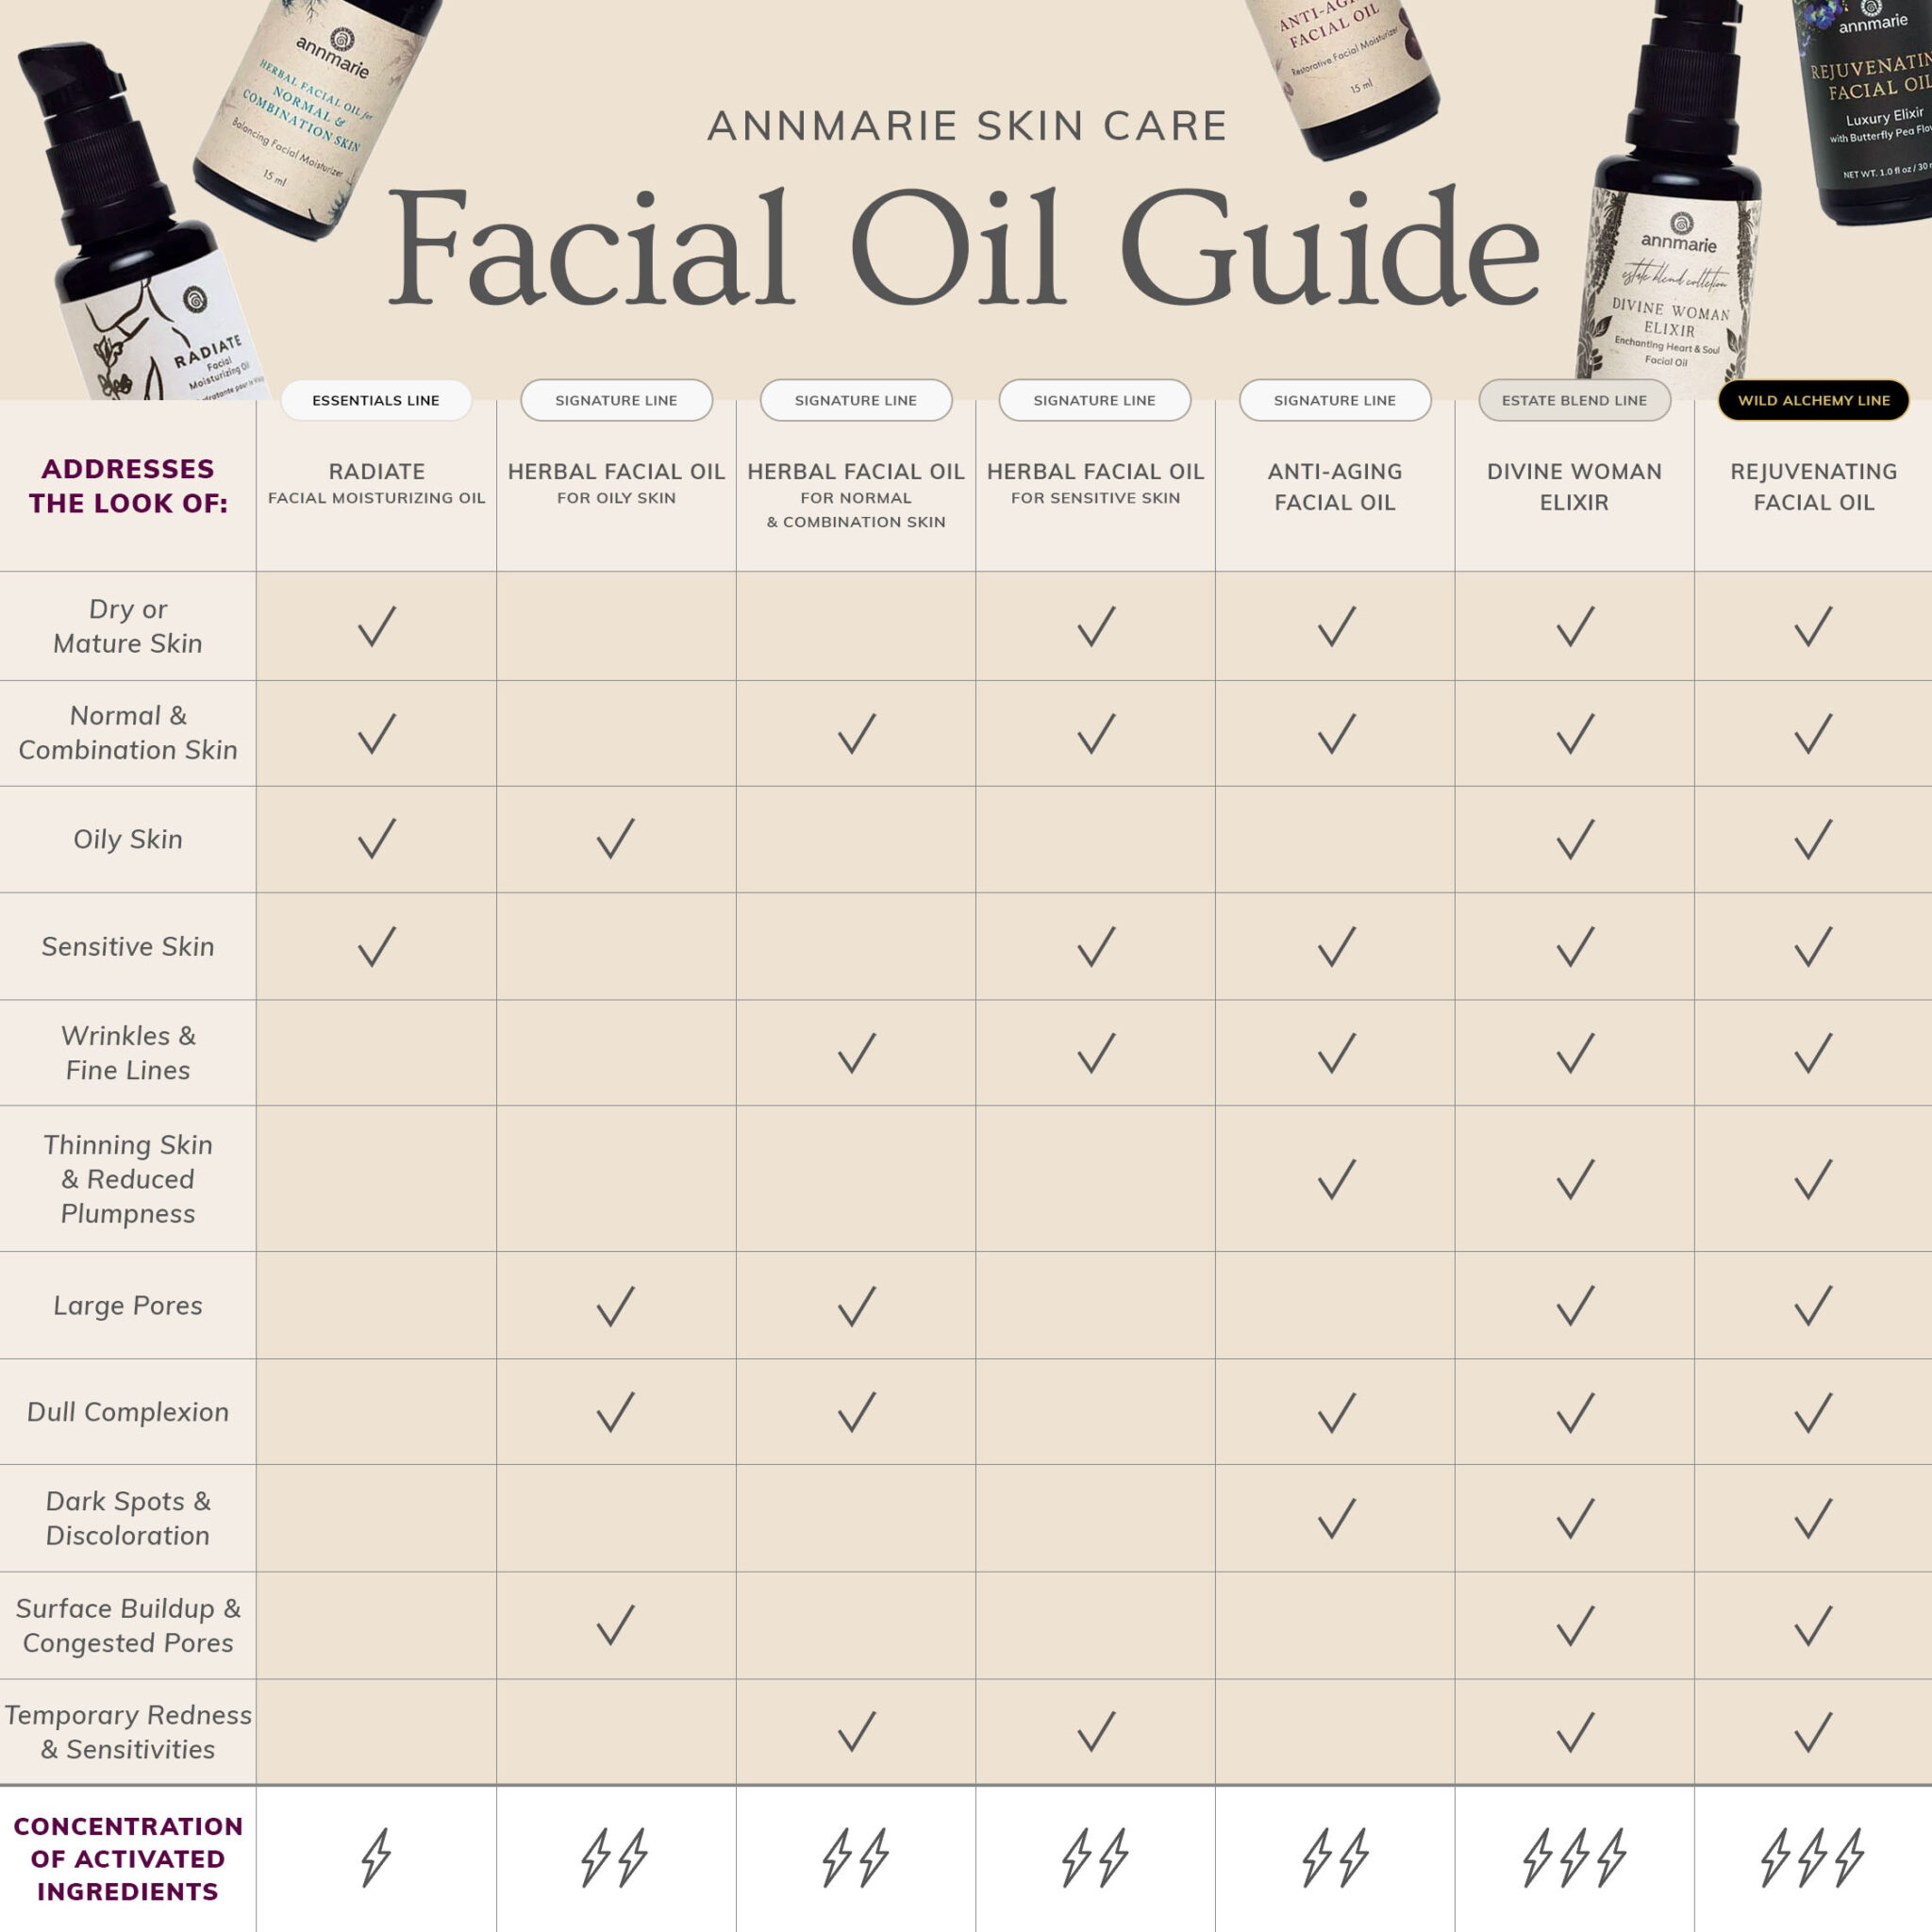 Annmarie Skin Care Facial Oil Guide 2